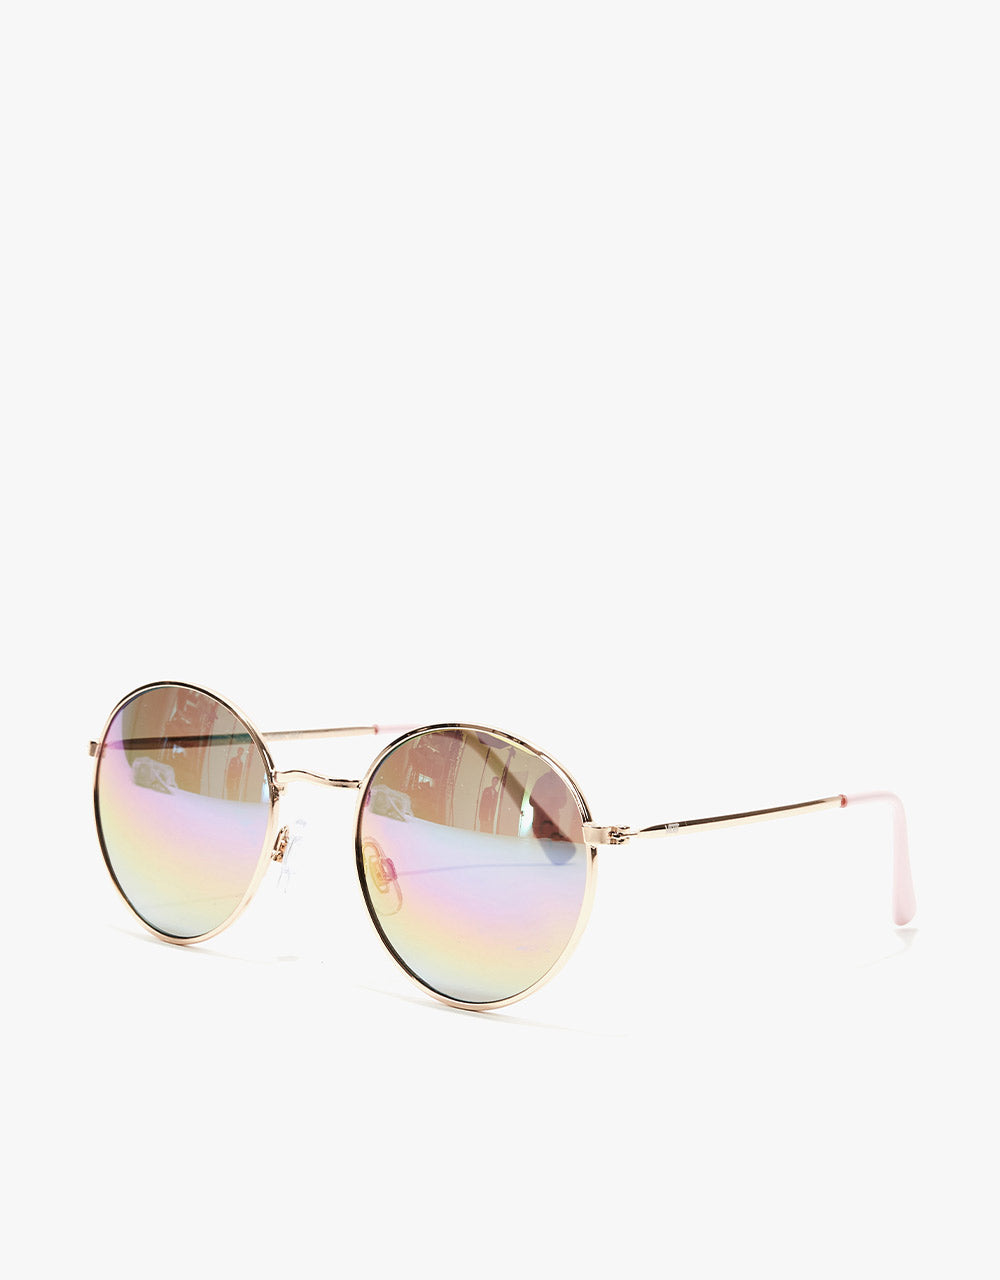 Vans Womens Glitz Glam Sunglasses - Gold Mirror